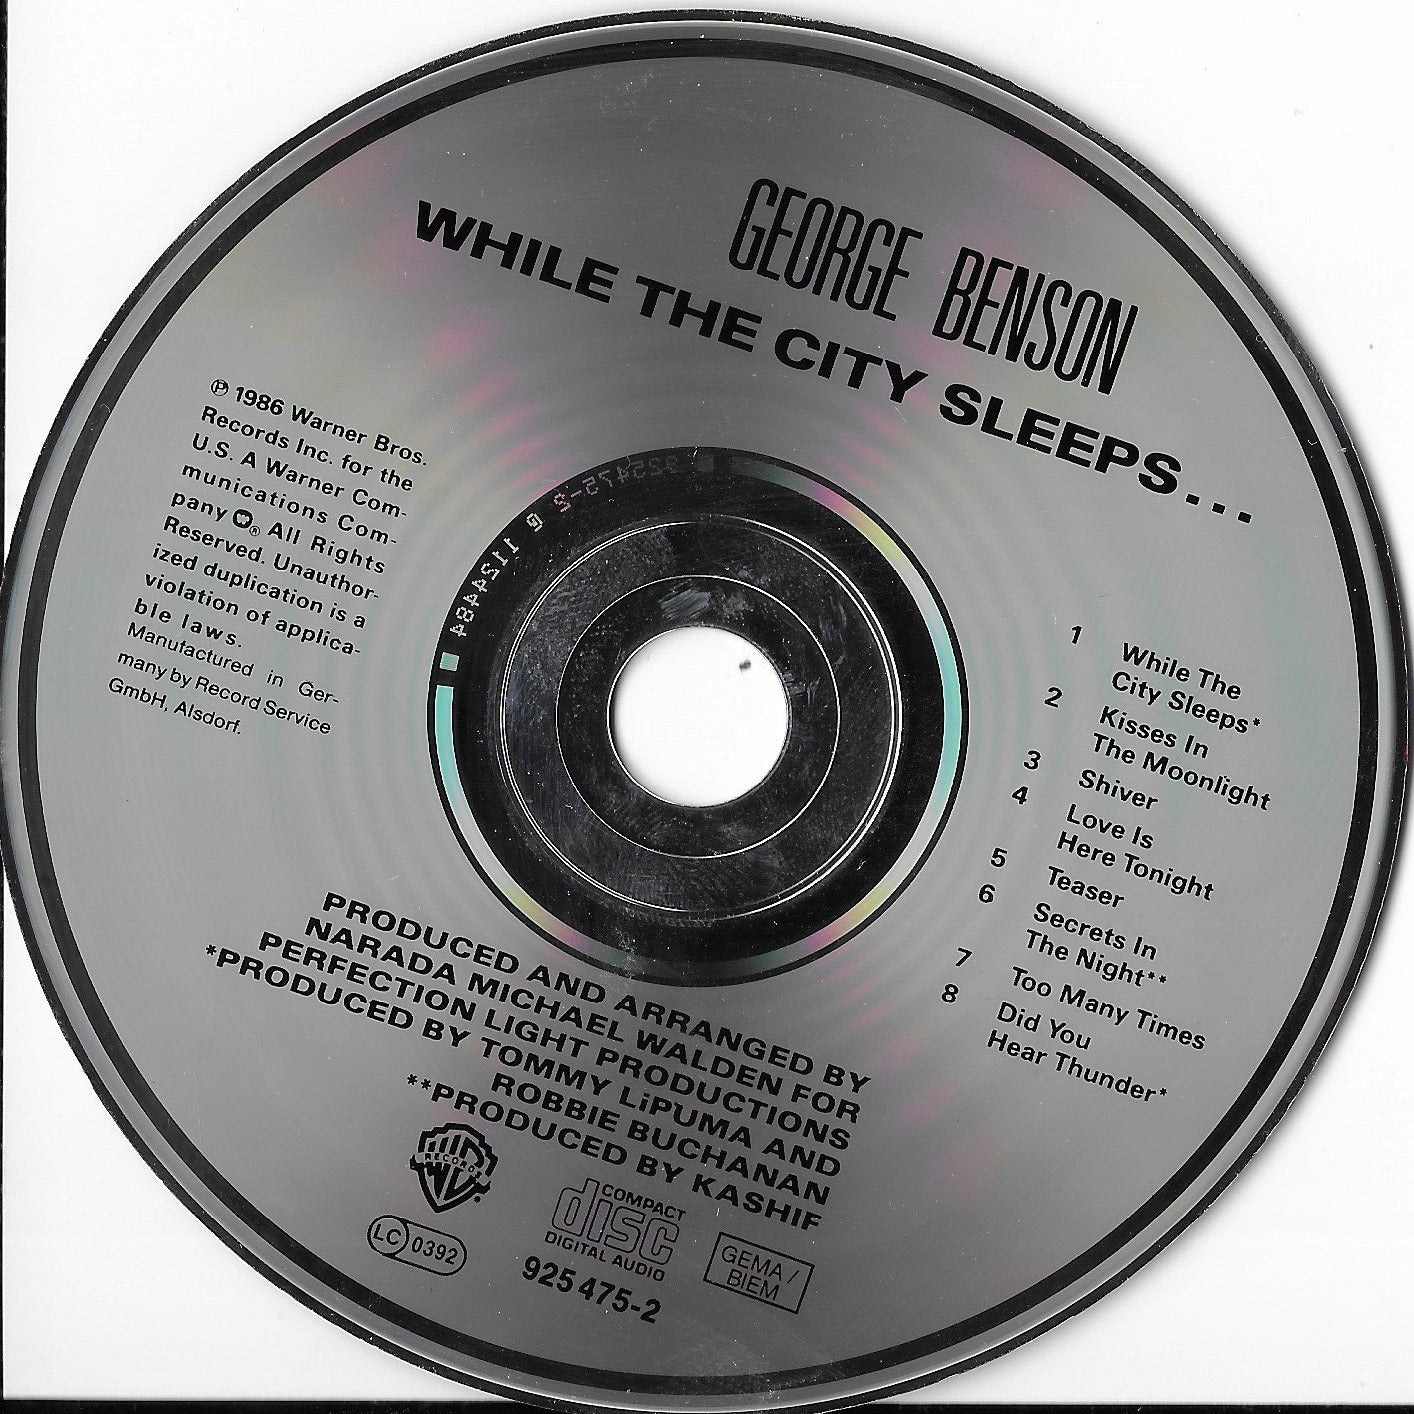 GEORGE BENSON - While The City Sleeps...